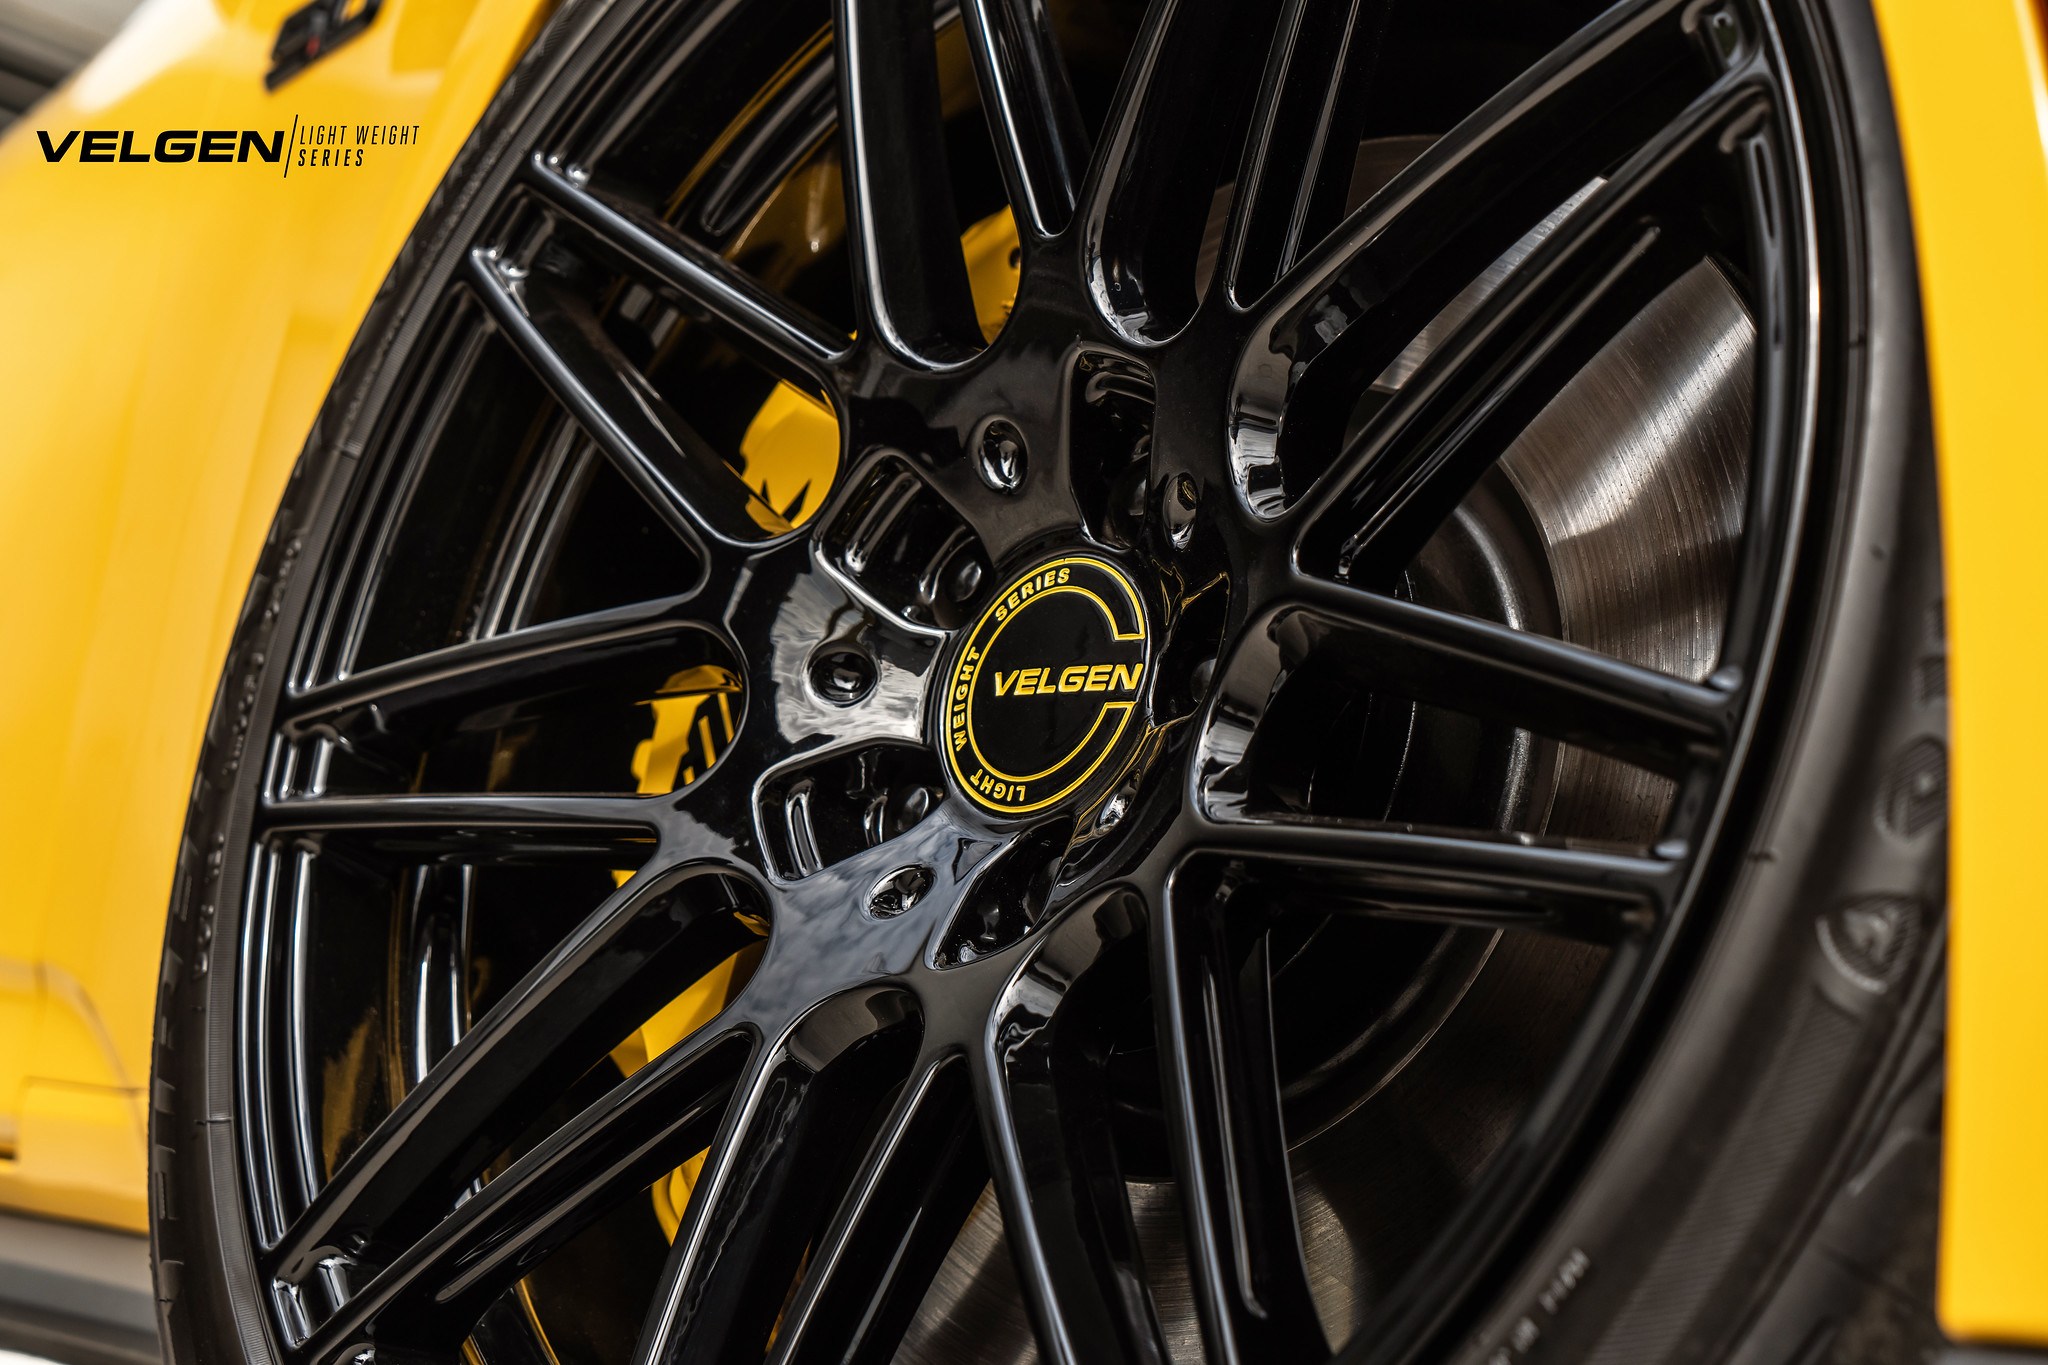 S650 Mustang Velgen wheels for your S650 Mustang | Vibe Motorsports 53445178938_a3c920d0ee_k